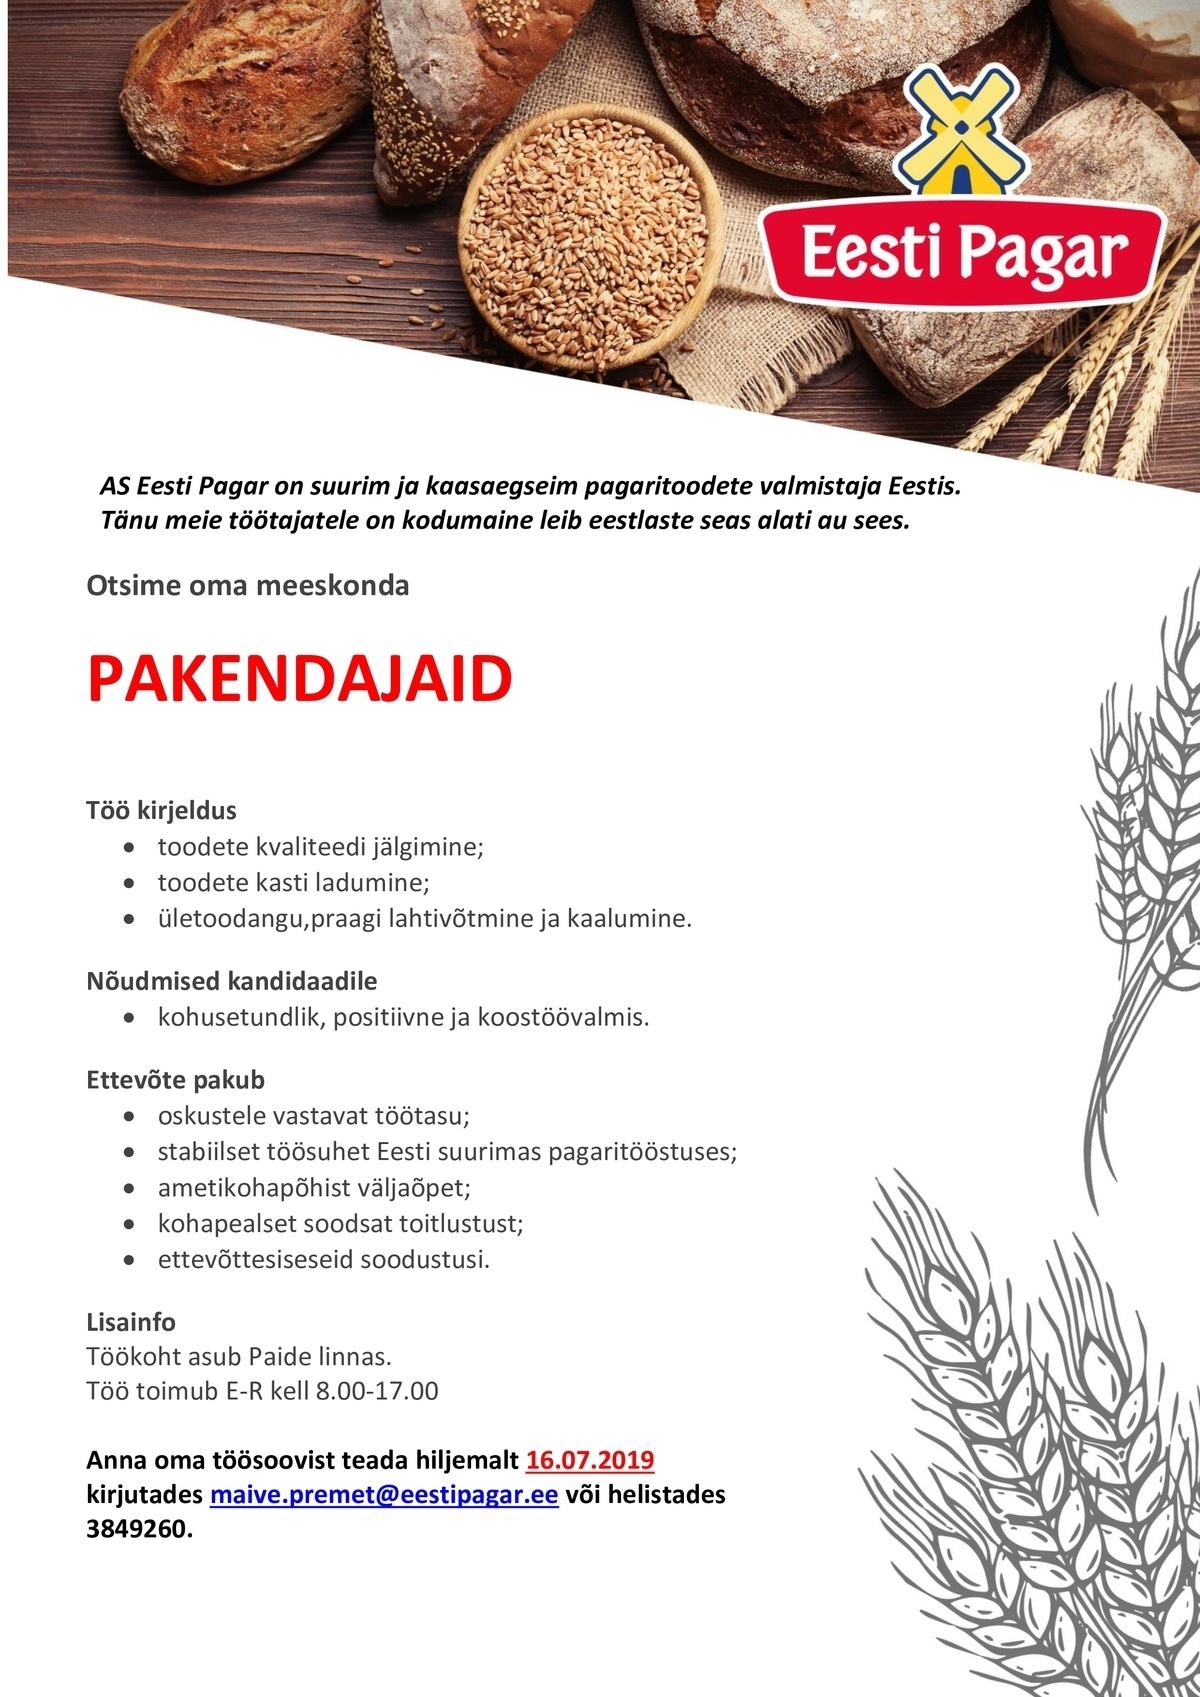 Eesti Pagar AS Pakendaja/toodete avaja